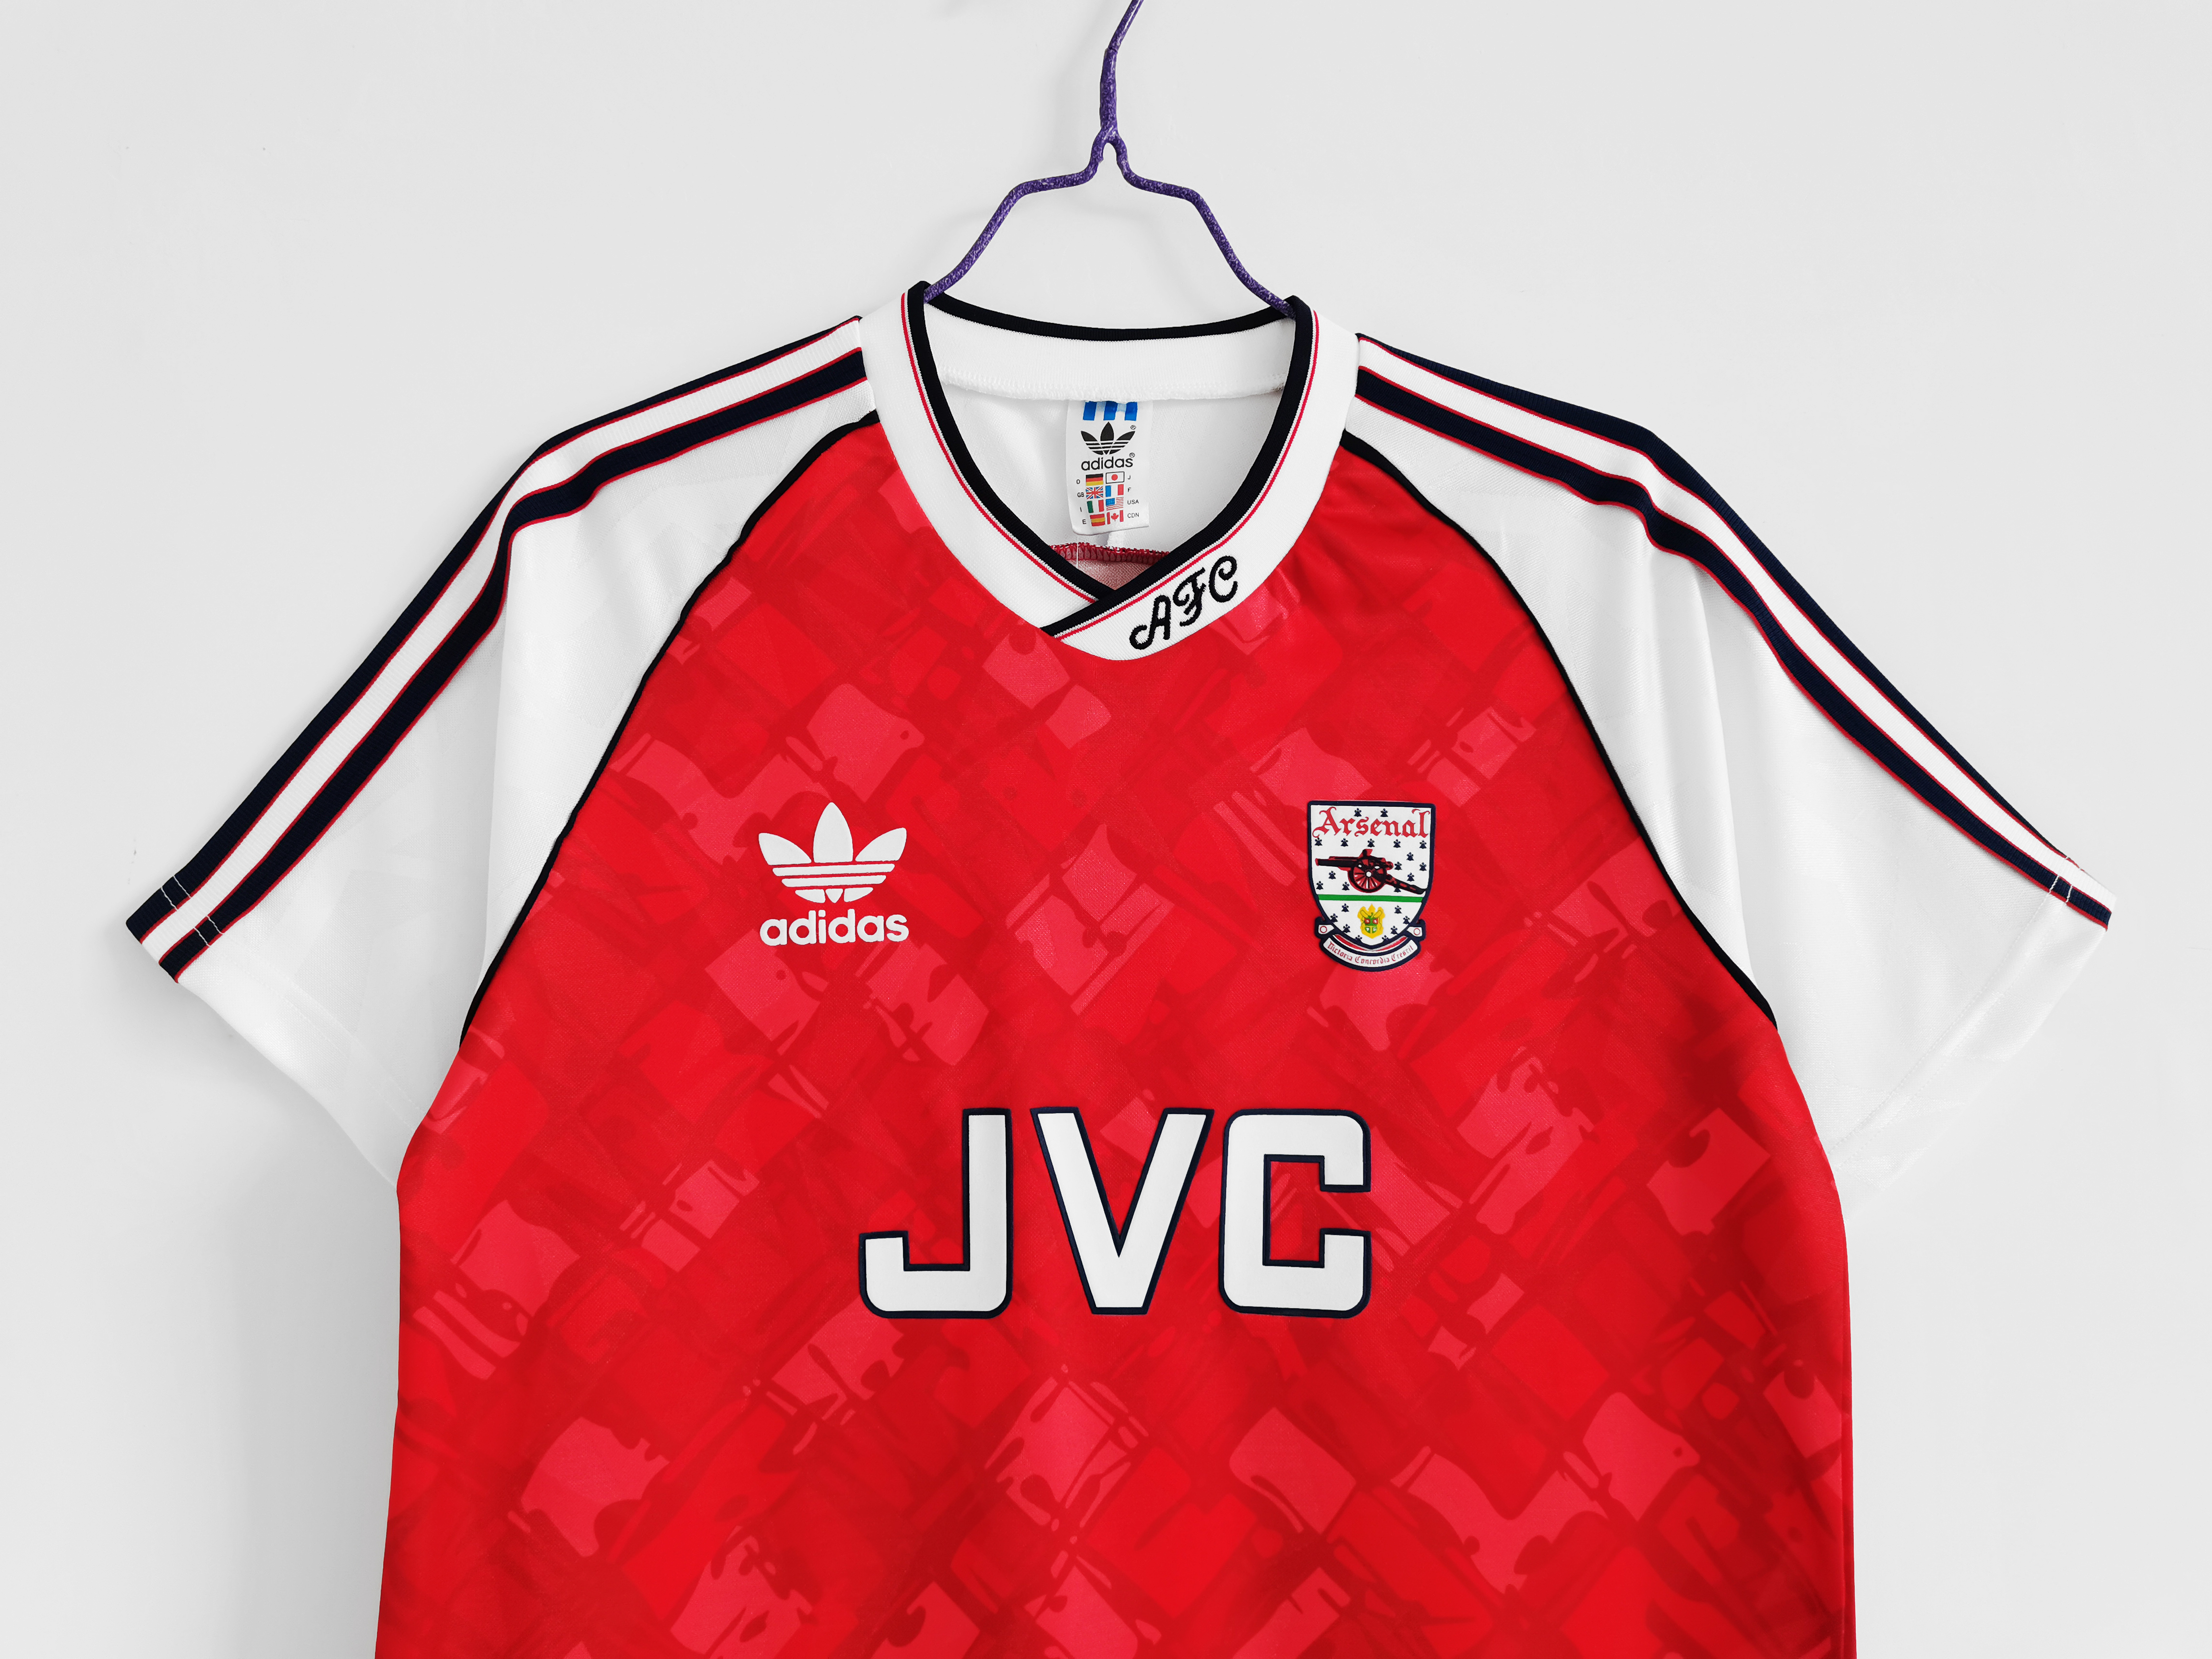 90-92 Arsenal FC retro kits